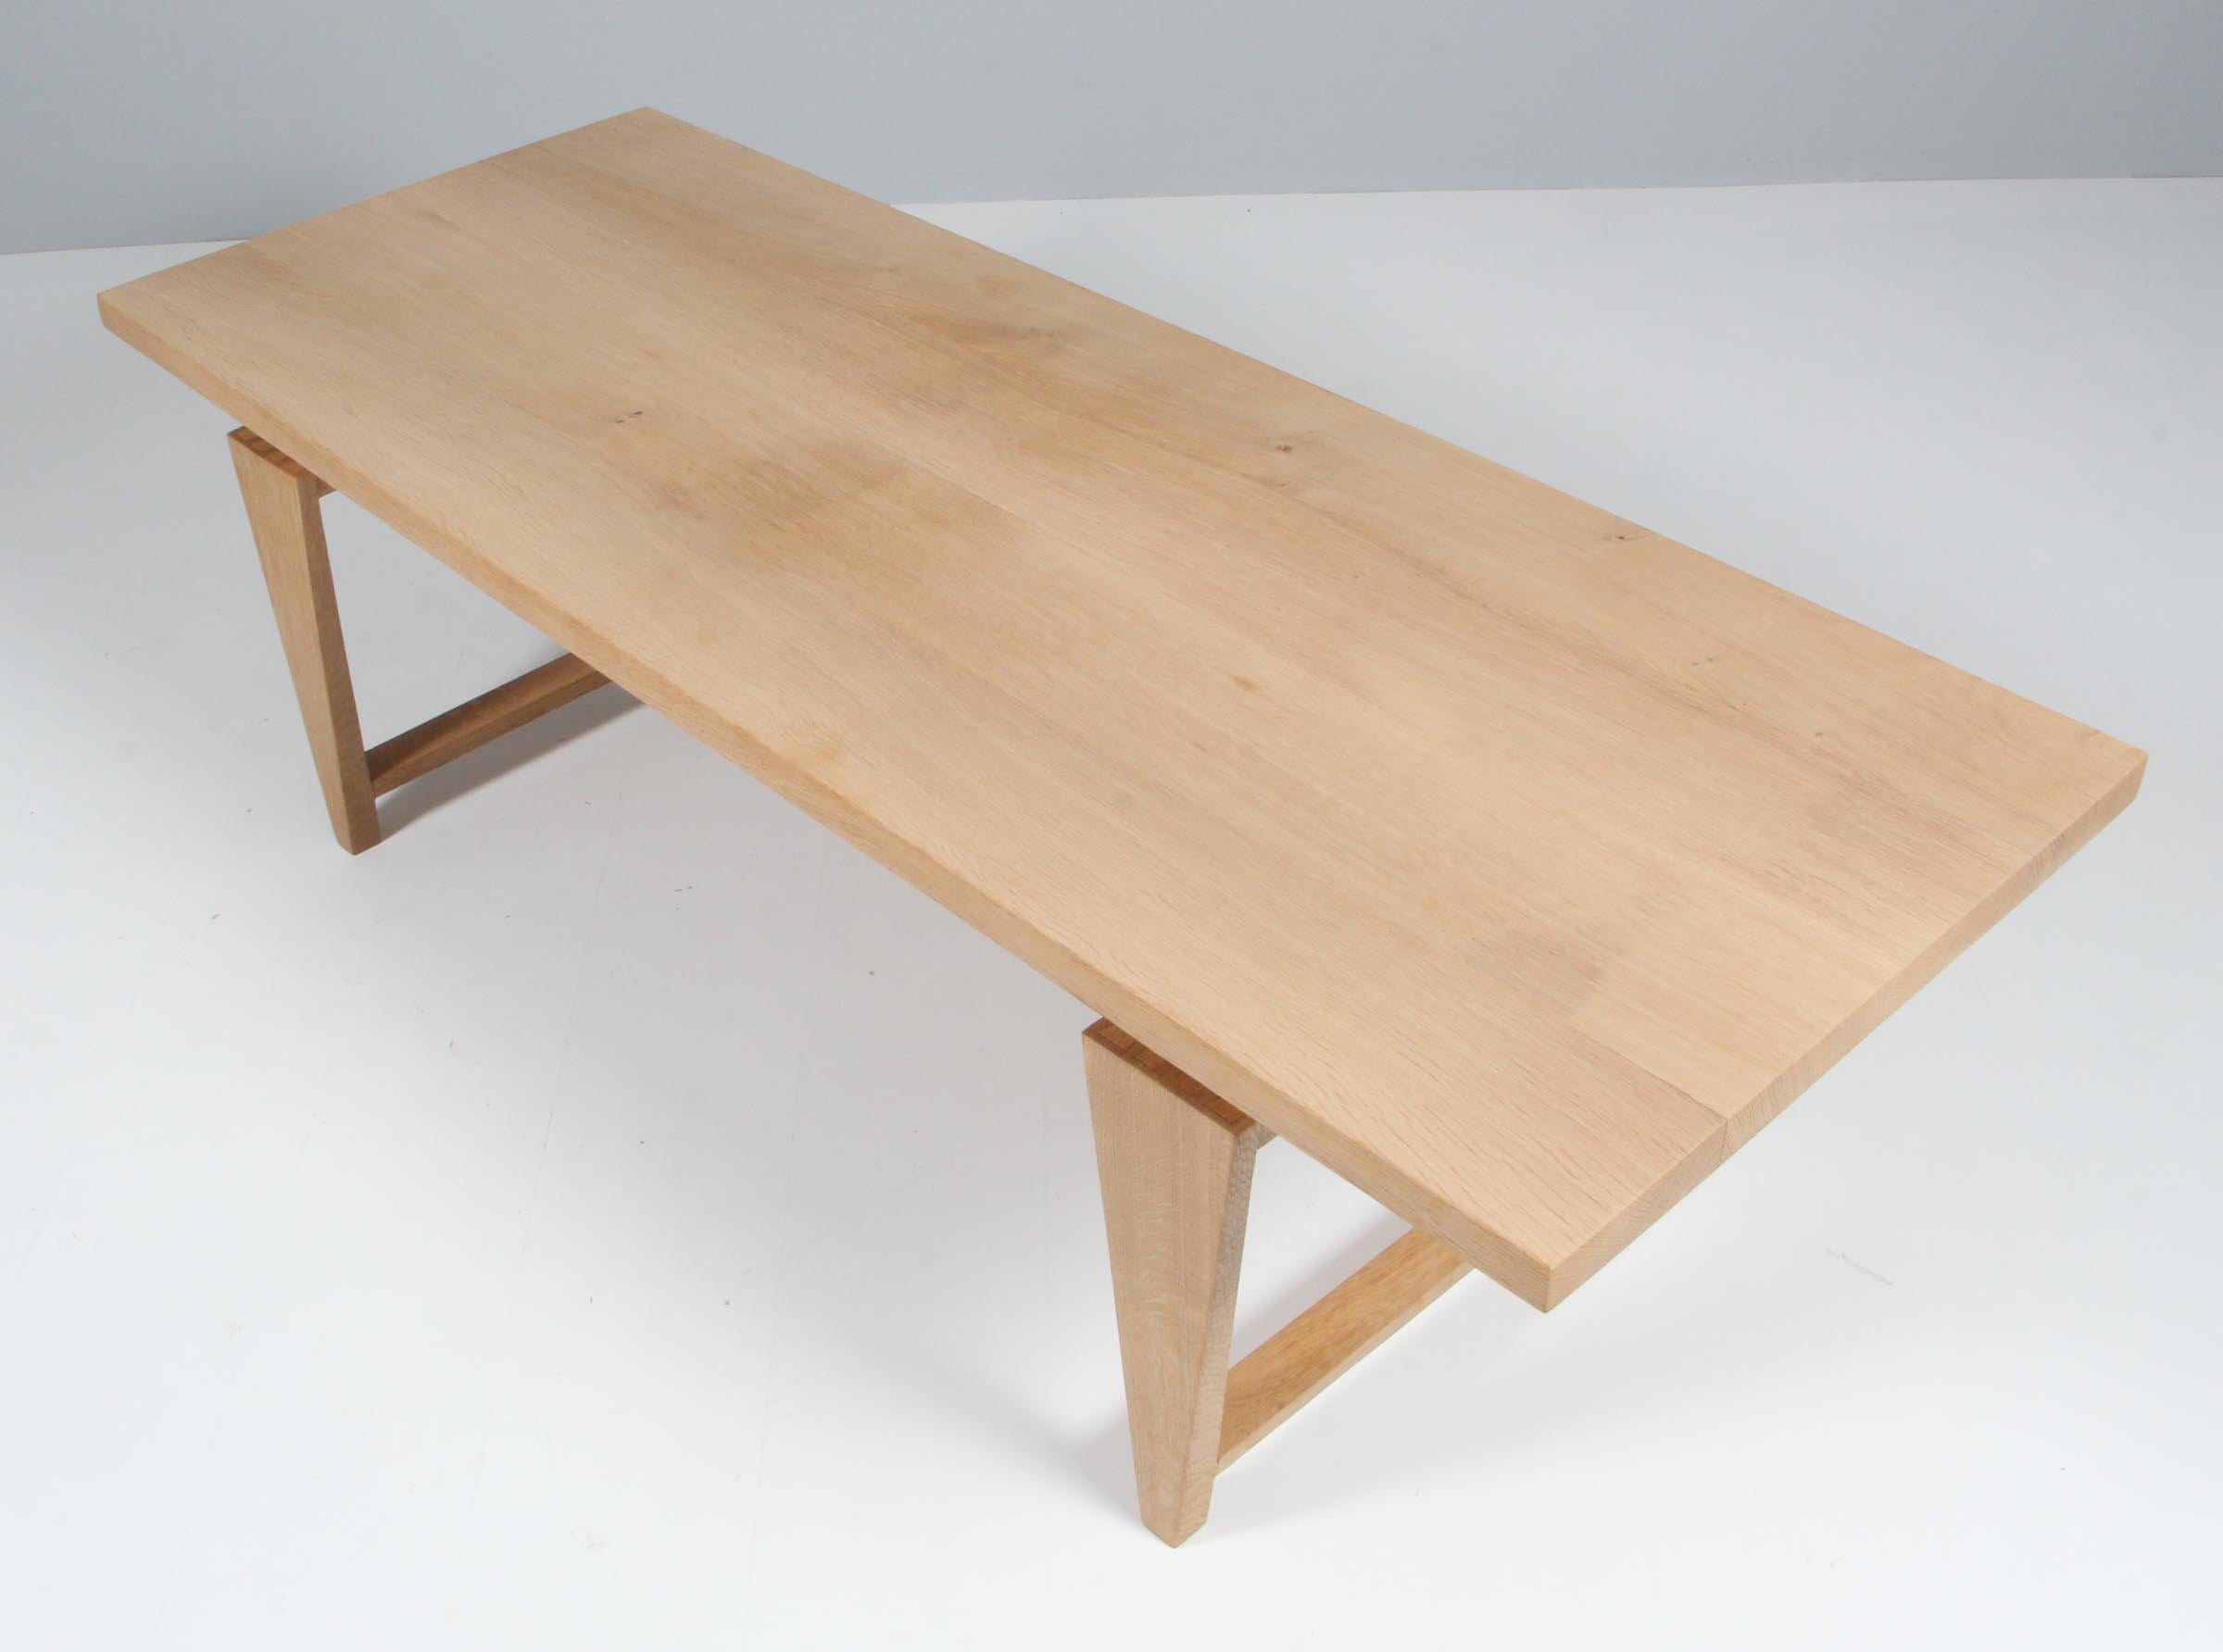 Illum Wikkelsø coffee table in solid soap treated oak.

Made by Mikael Laursen, Århus.